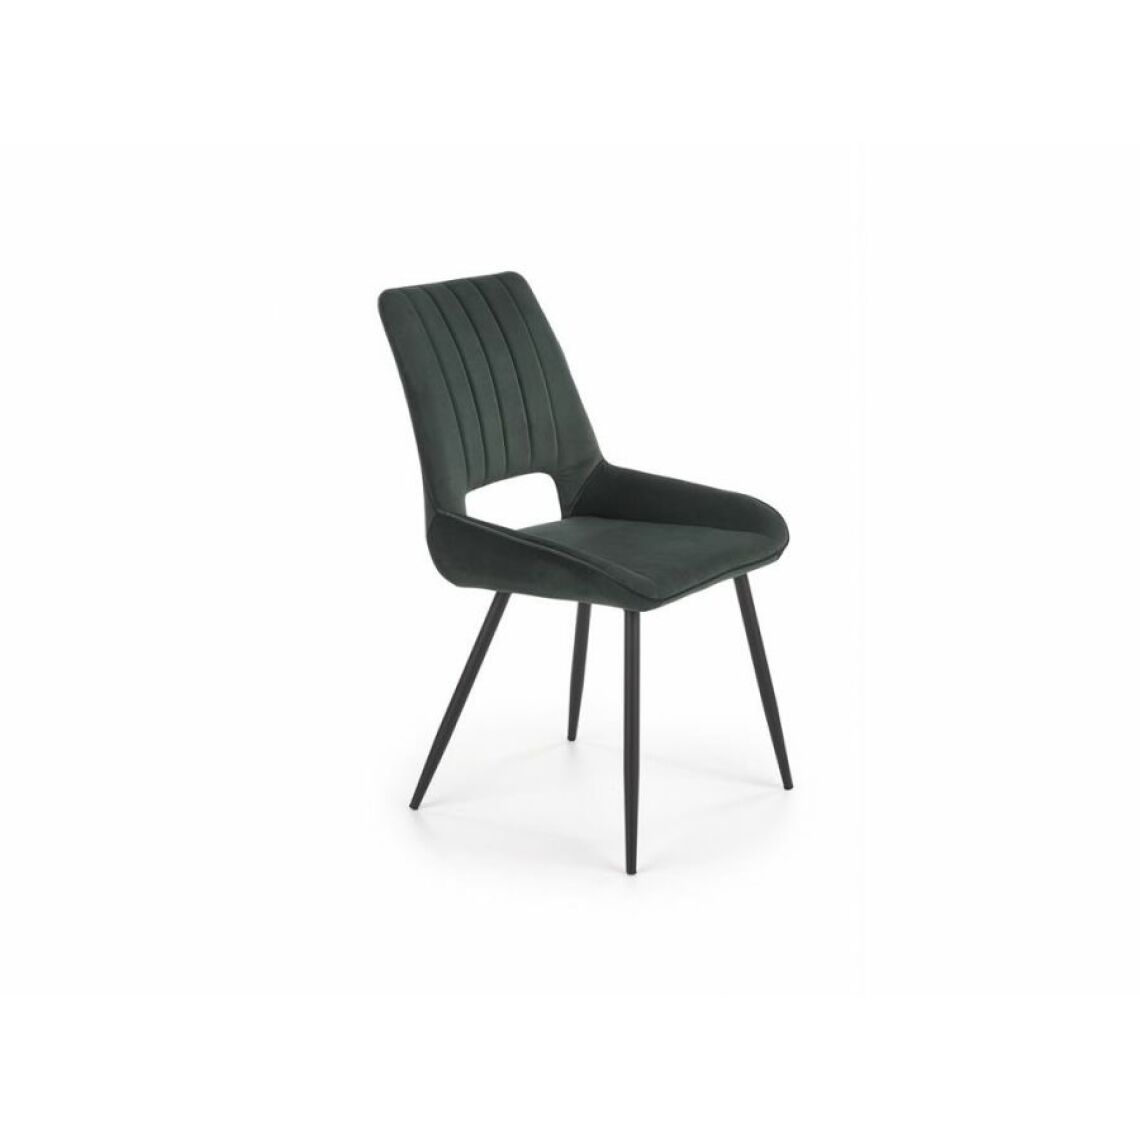 Hucoco - KITYSO - Chaise style glamour salon/salle à manger - 88x58x52 cm - Vert - Chaises